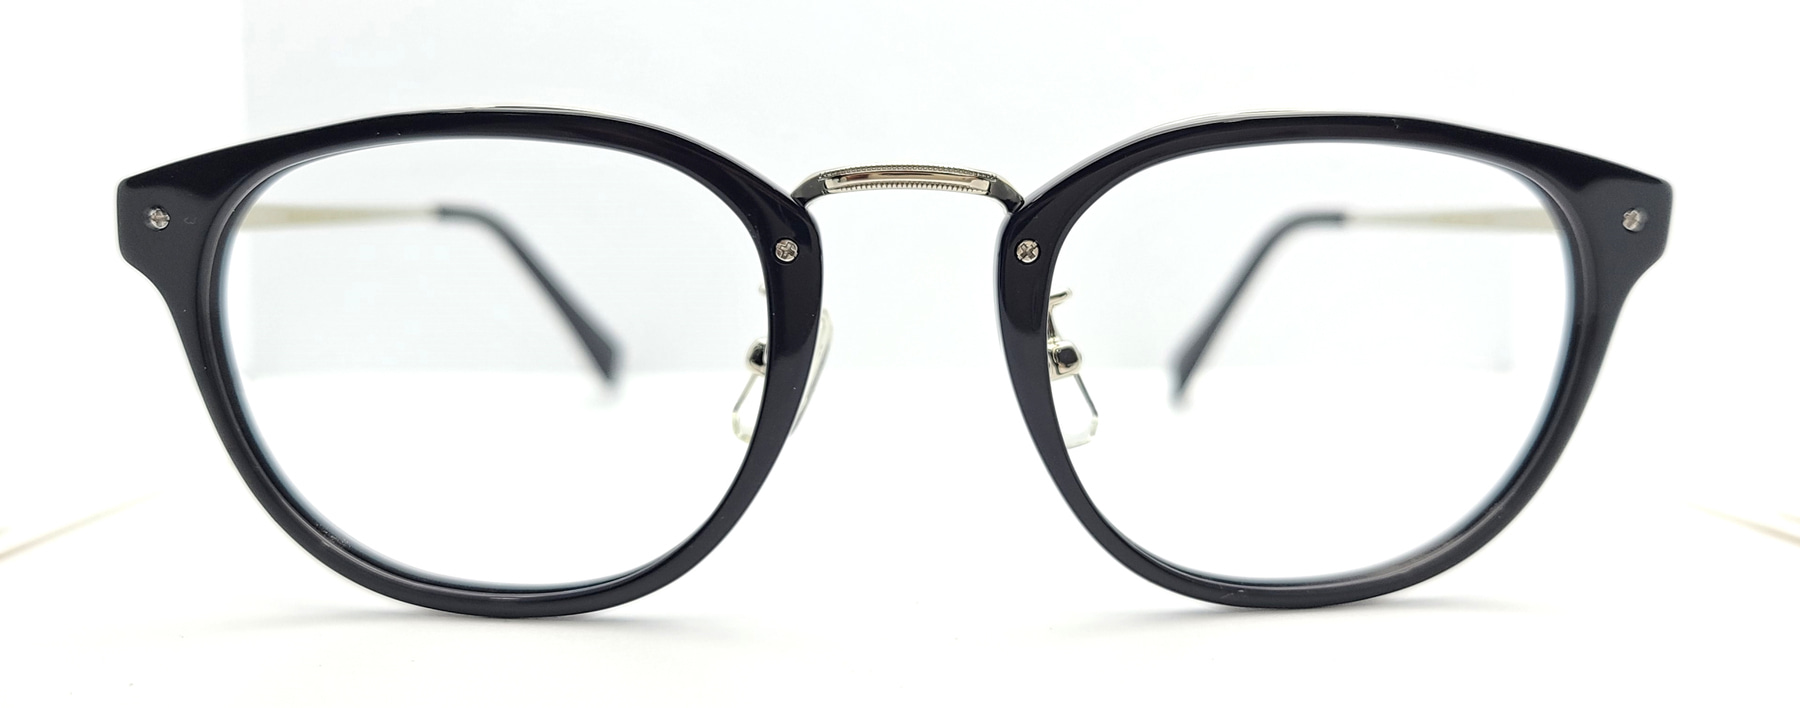 MINIHOUSE M-1386, Korean glasses, sunglasses, eyeglasses, glasses